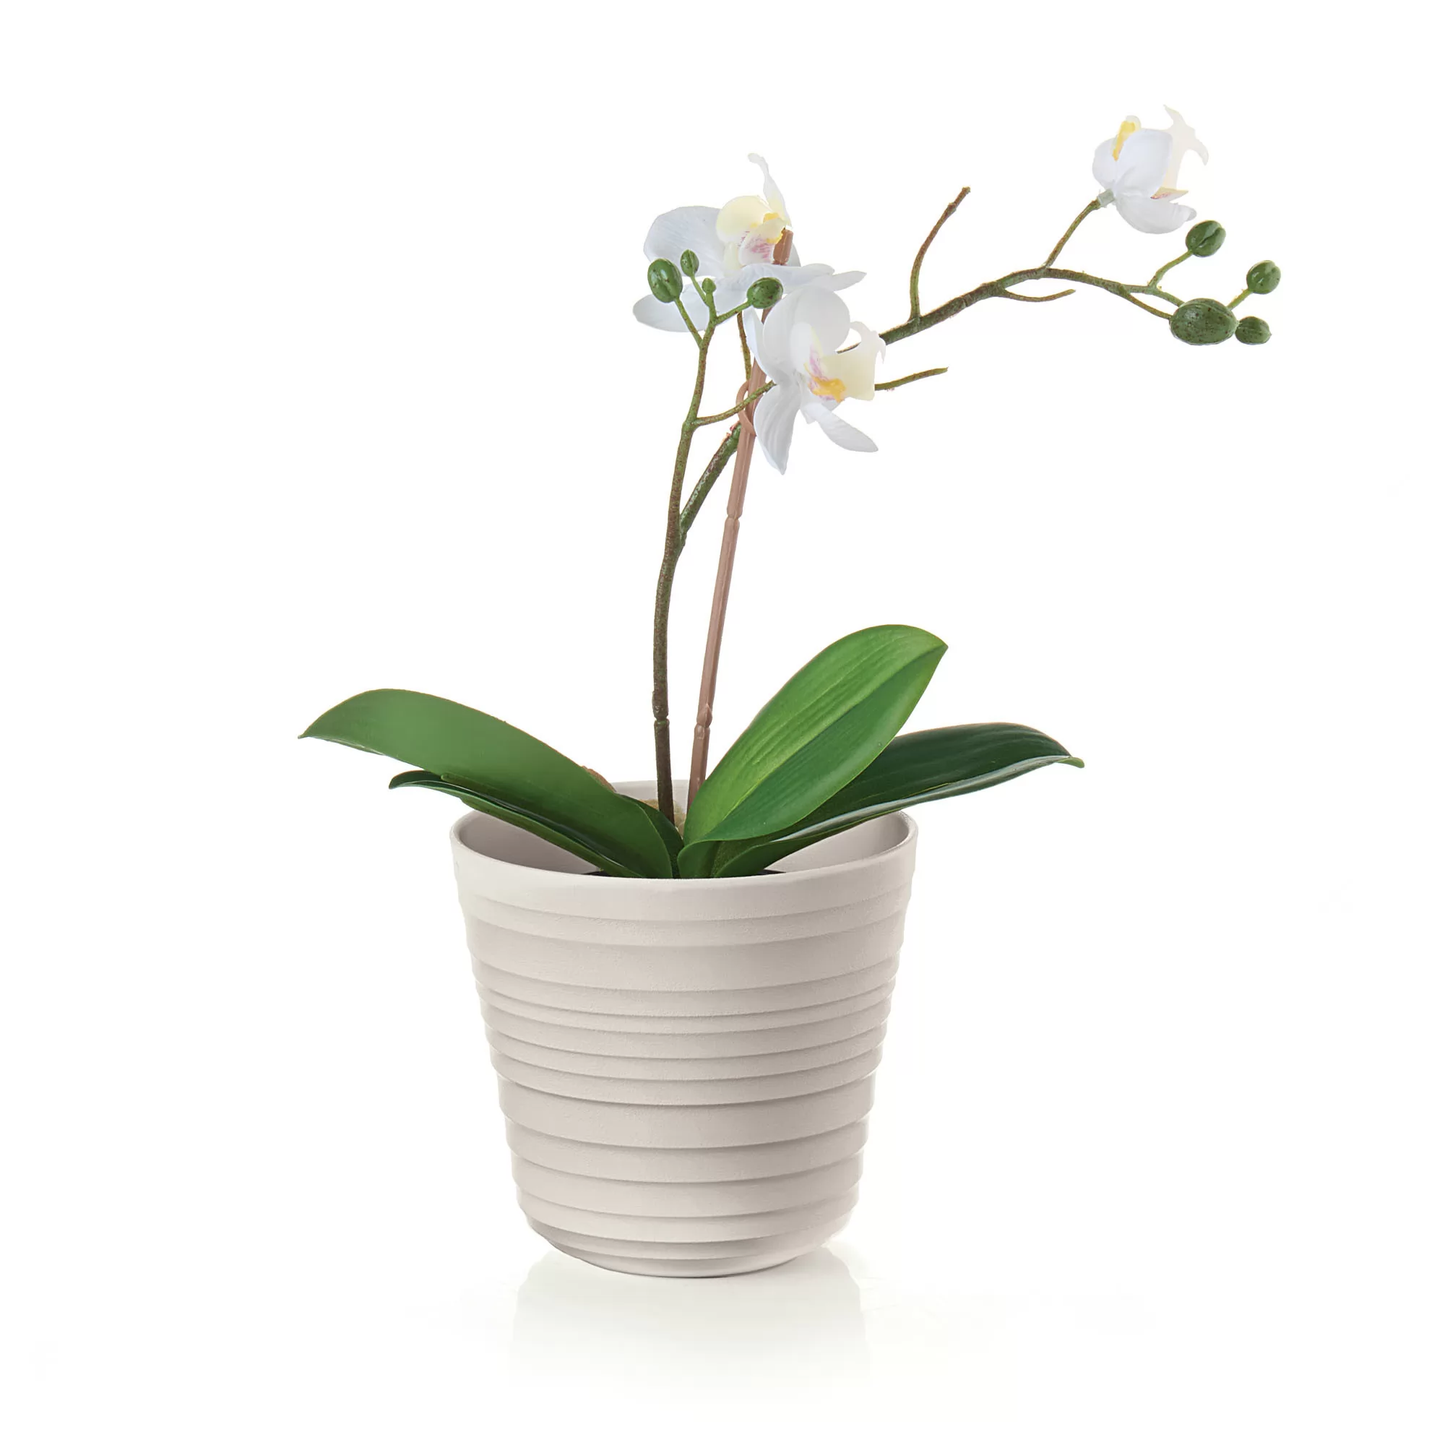 Guzzini Tierra single plant pot holder 12.8x12 cm taupe